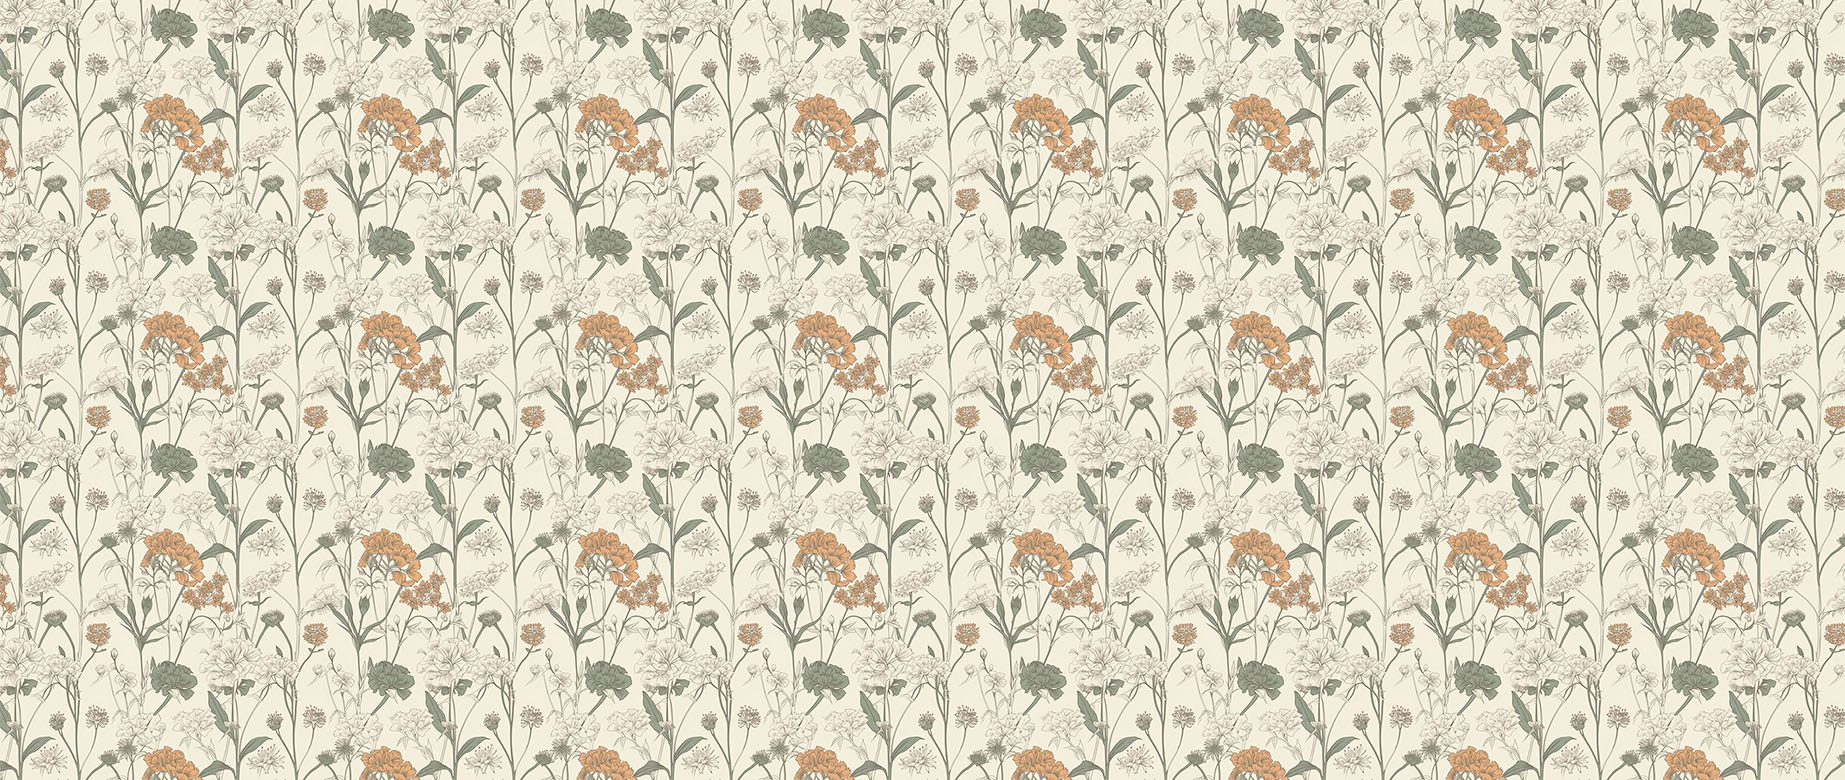 green-orange-flowers-in-cream-background-wallpaper-wide-view